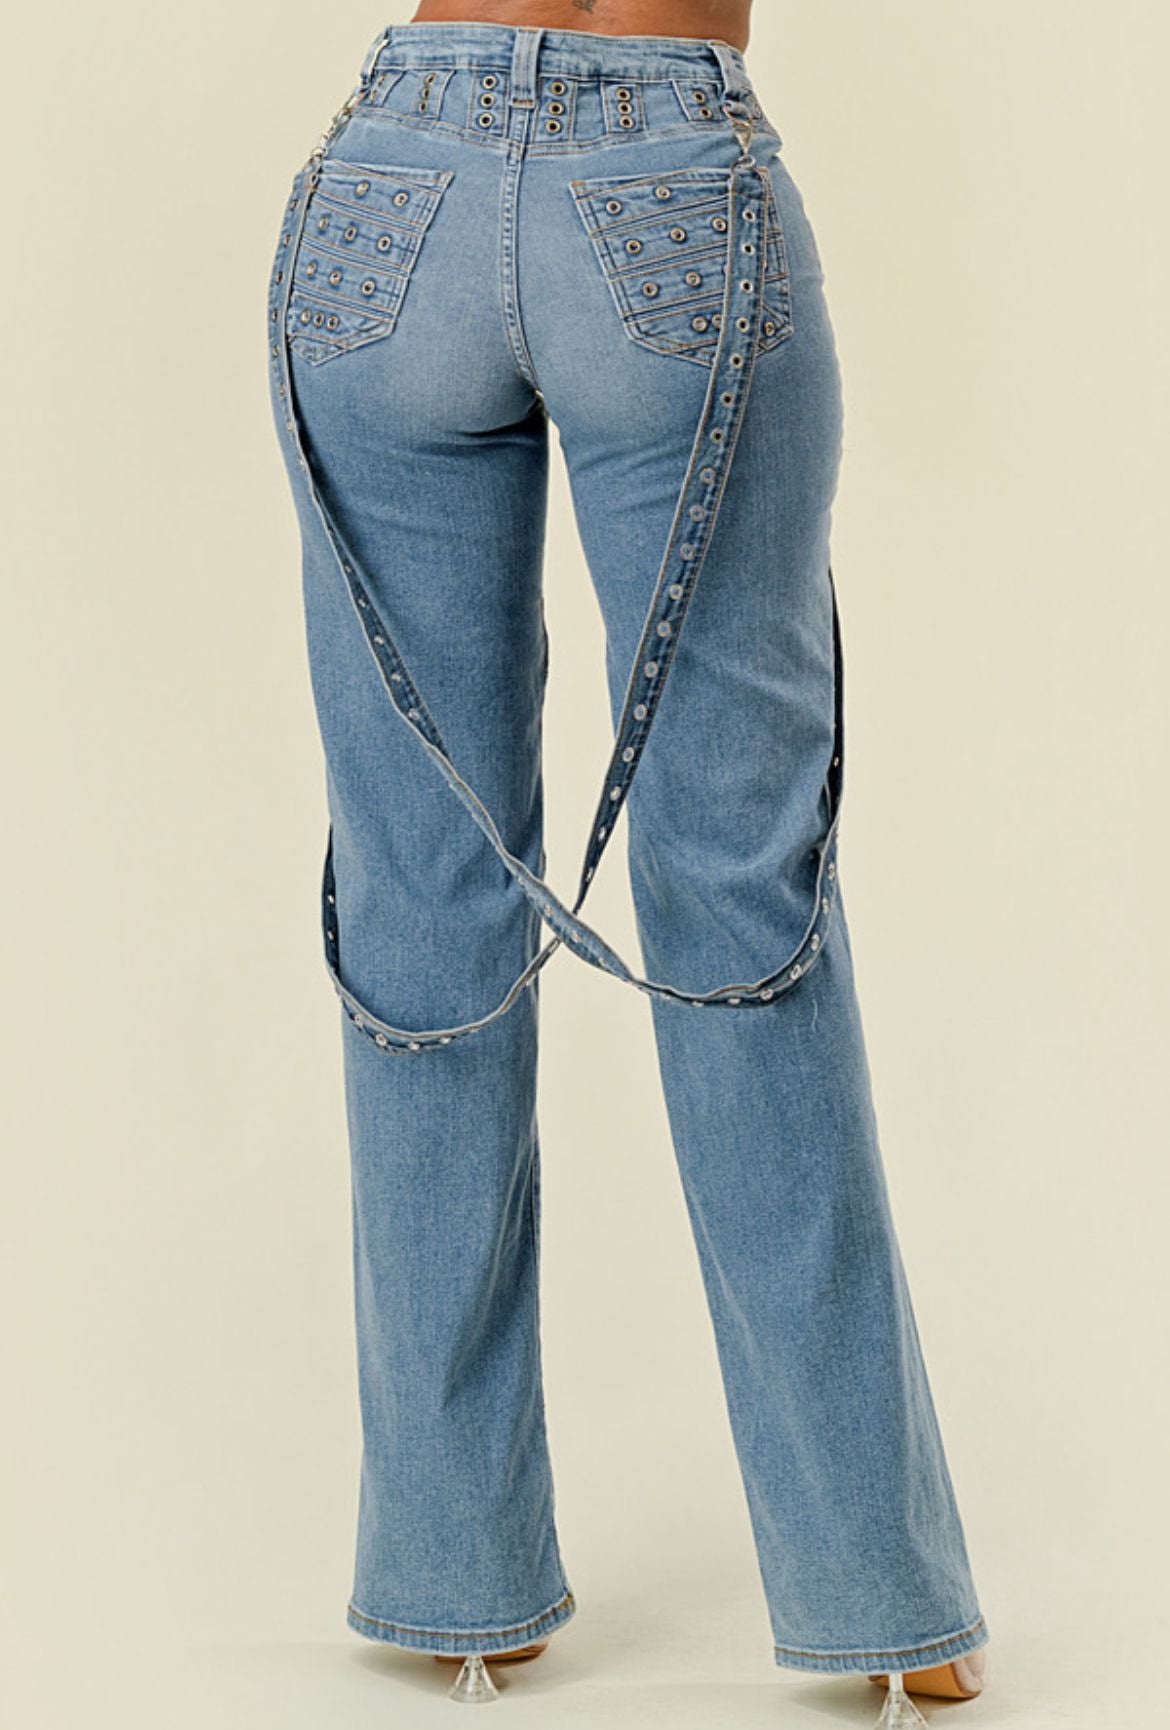 Grommet Denim Jeans